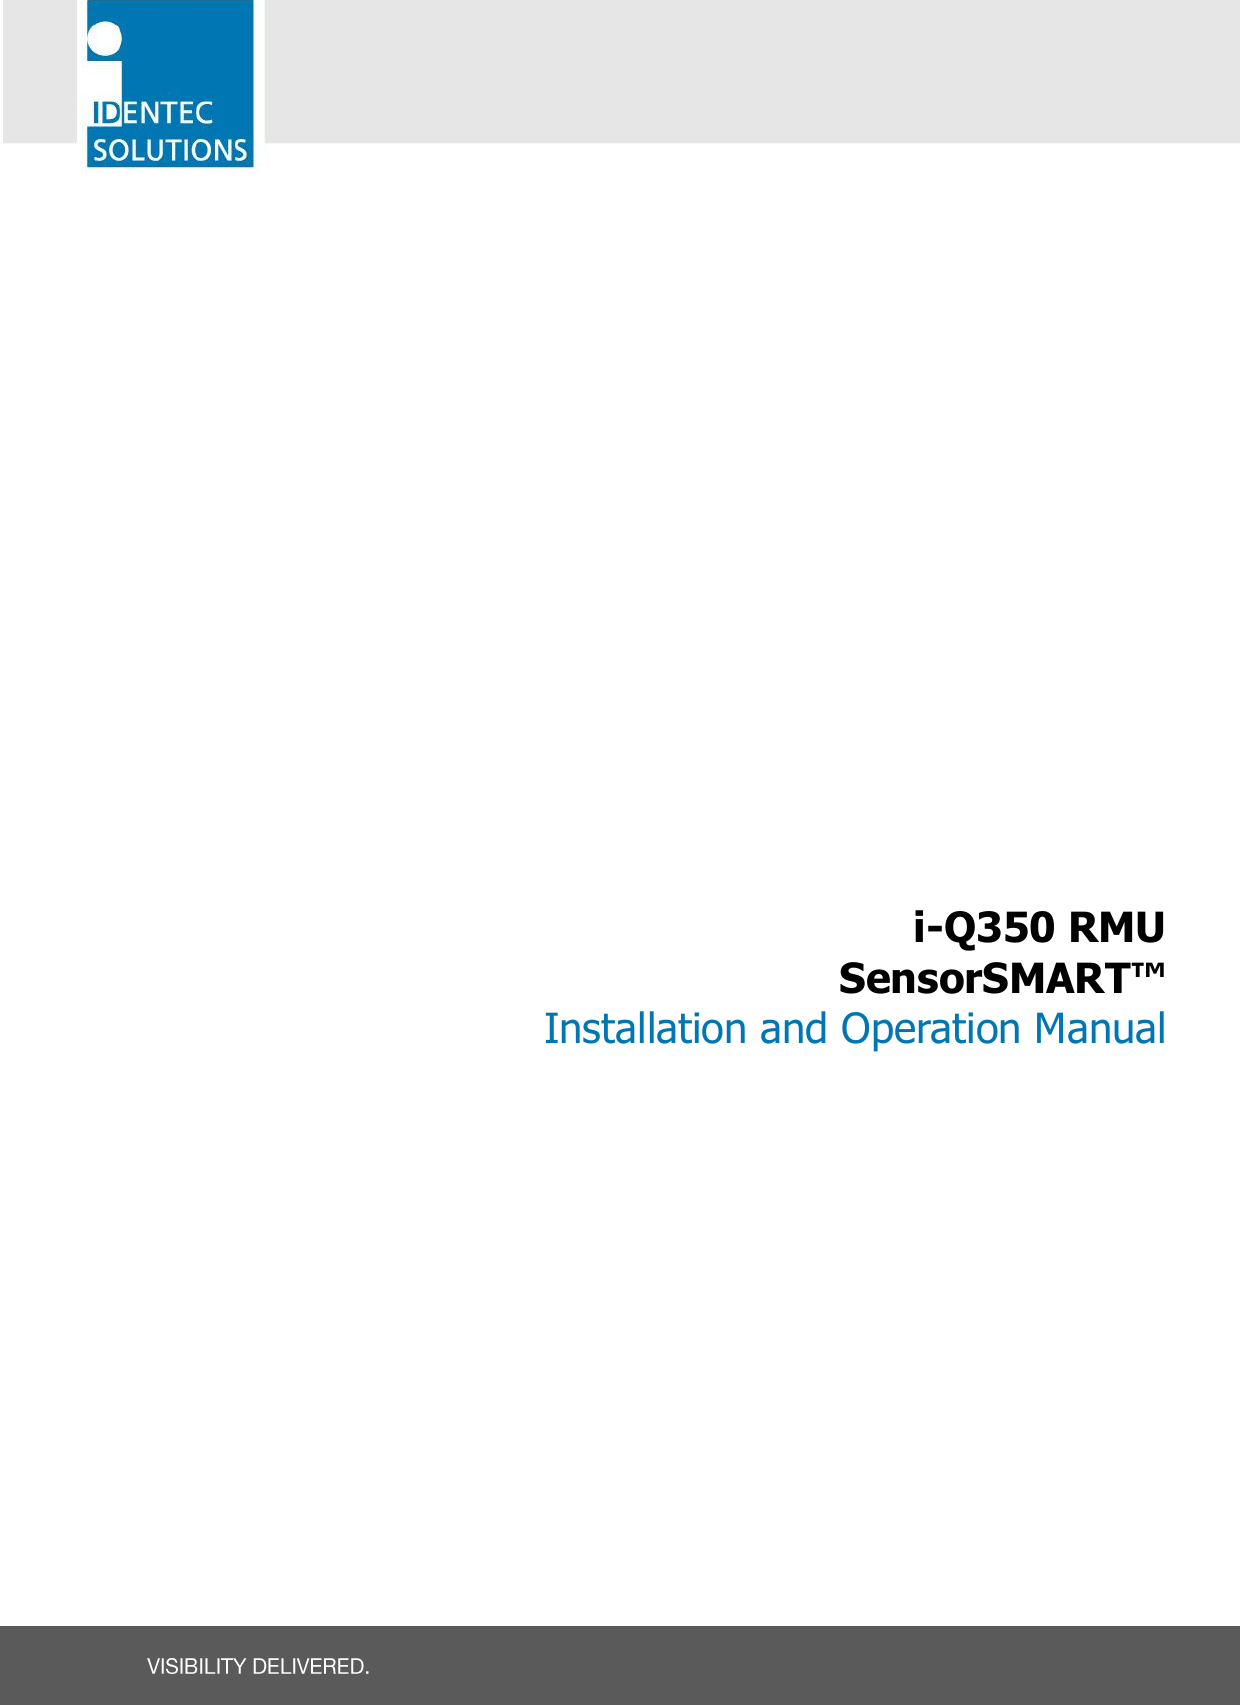                          i-Q350 RMU SensorSMART™ Installation and Operation Manual 